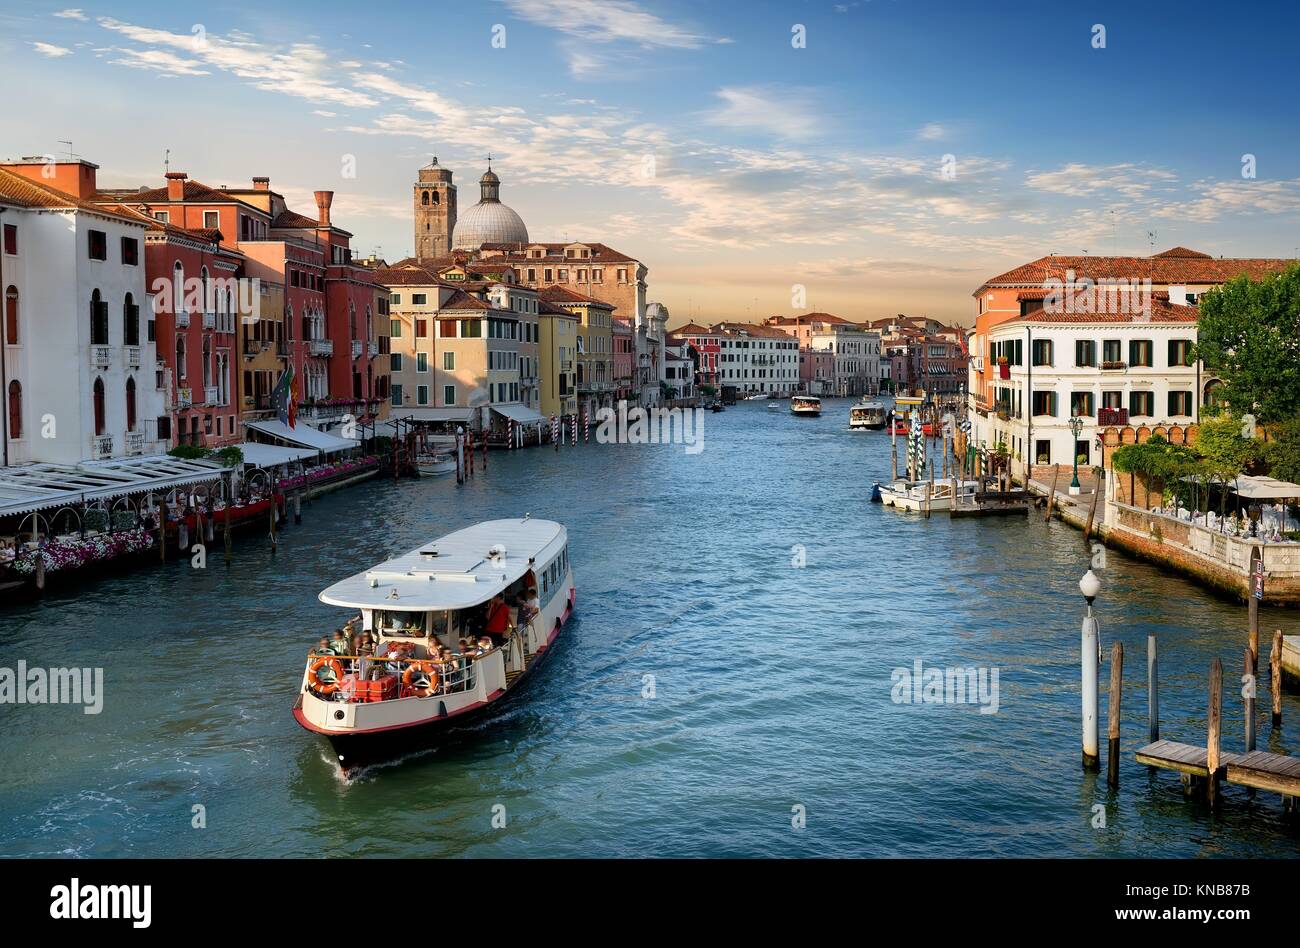 Mit dem Vaporetto am Grand Canal in Venedig, Italien. Stockfoto